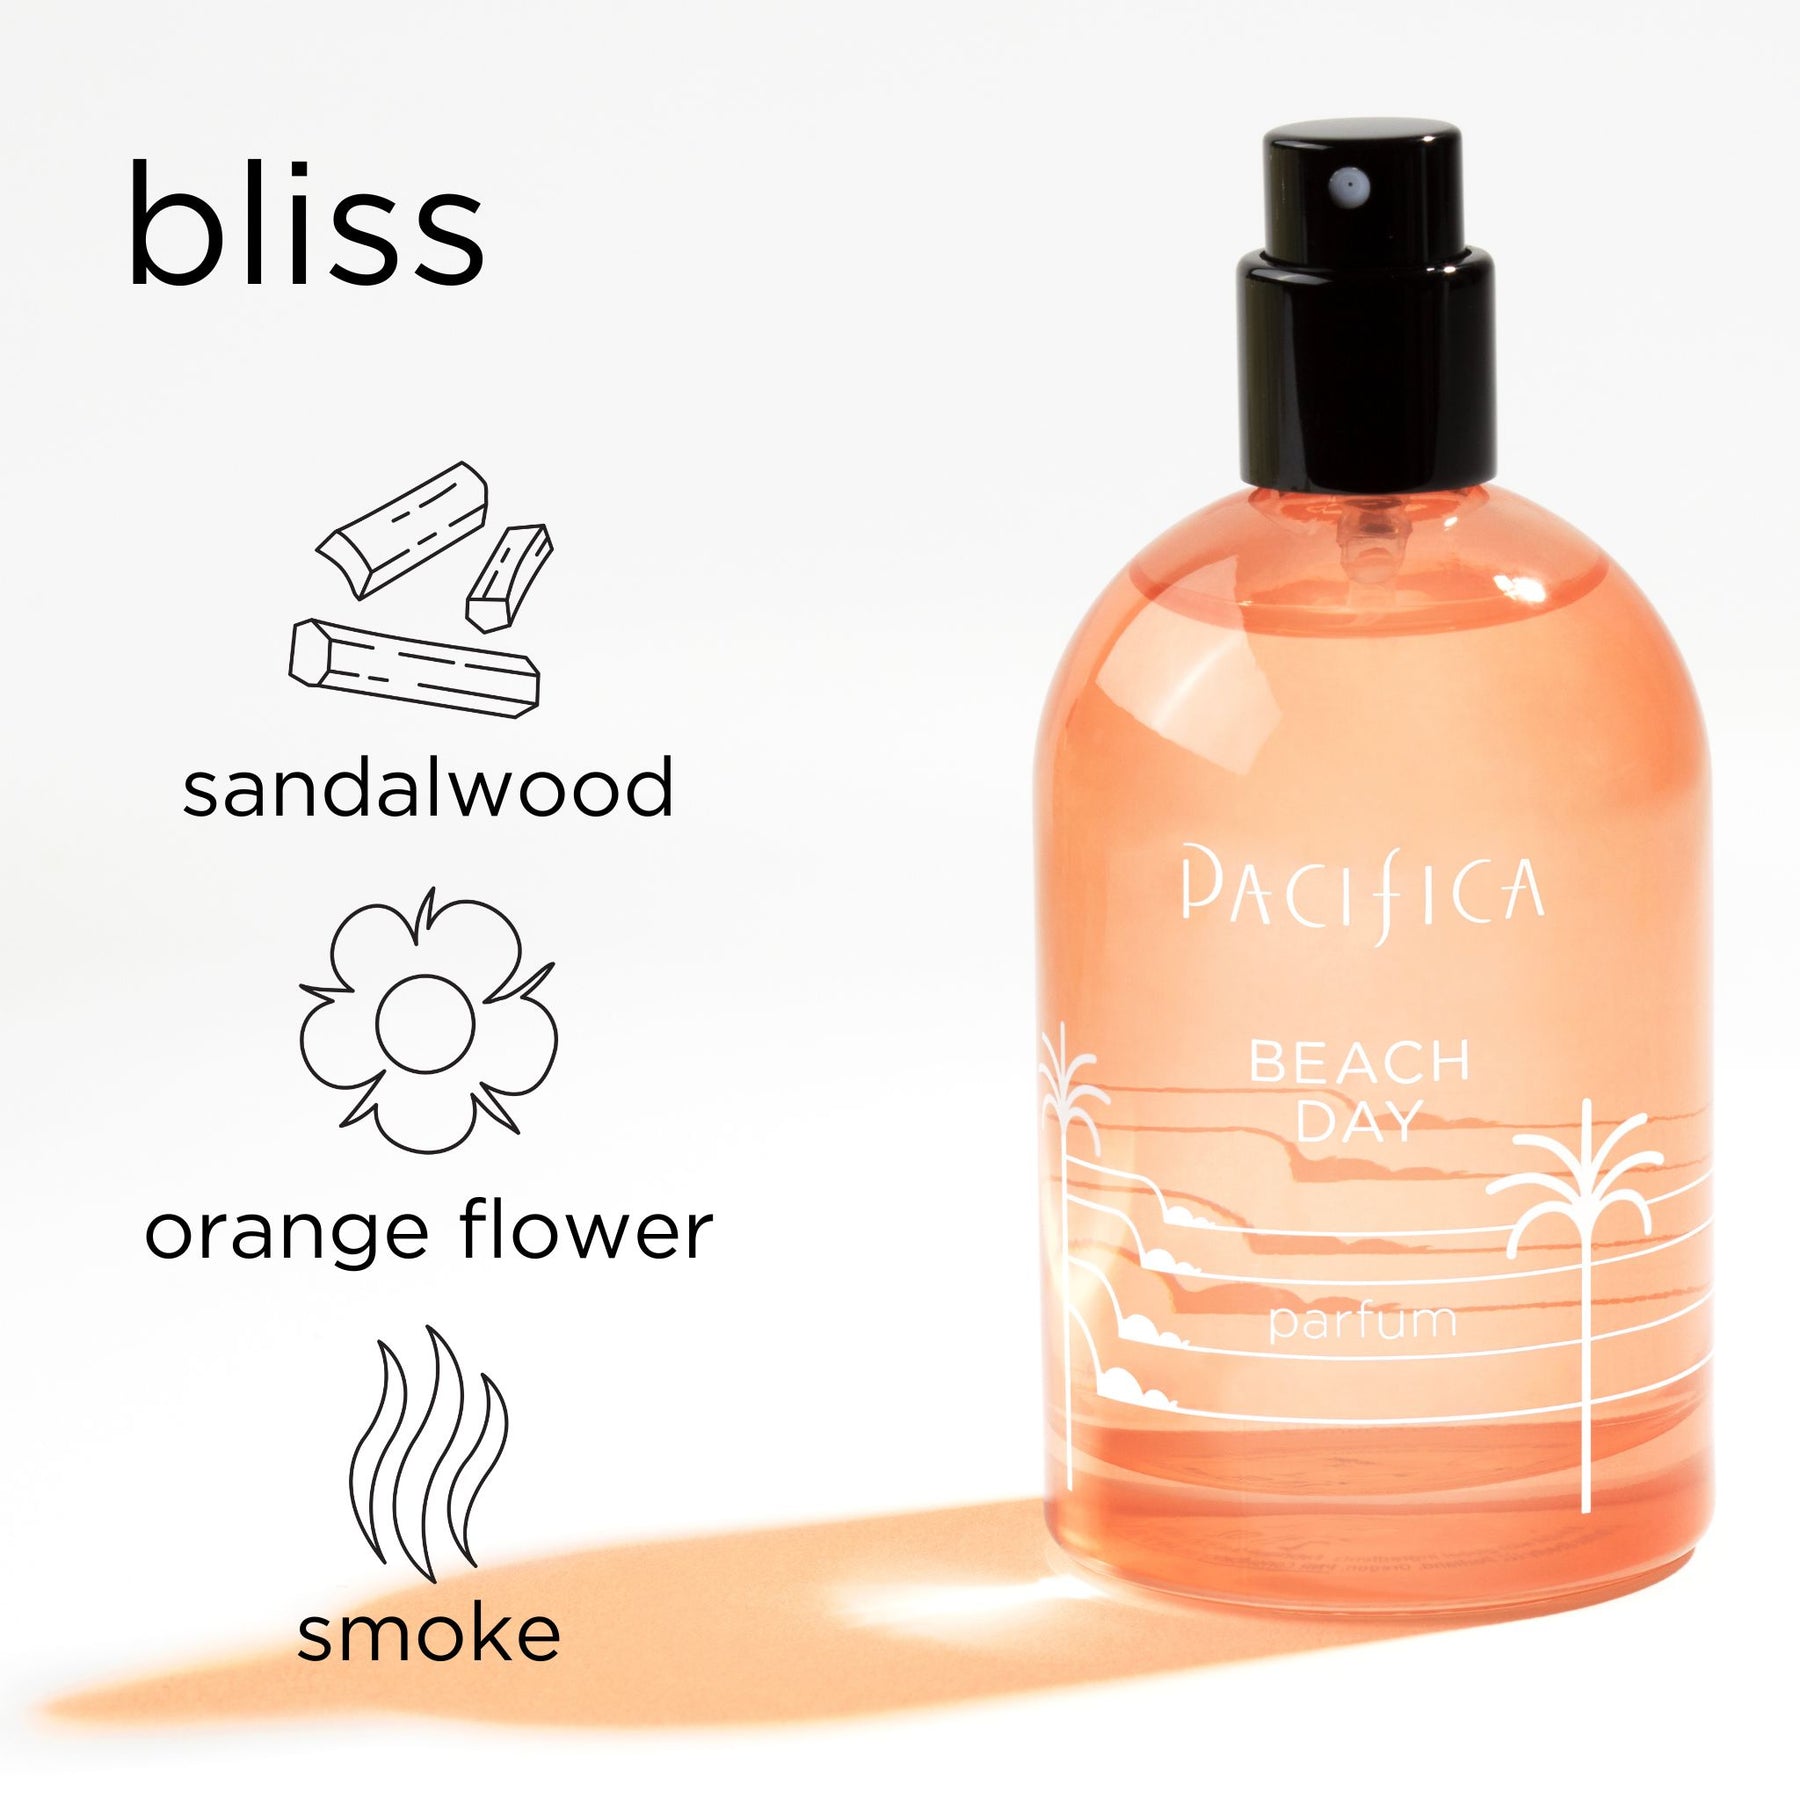 Beach Day Perfume contains sandalwood, orange flower, and smoke